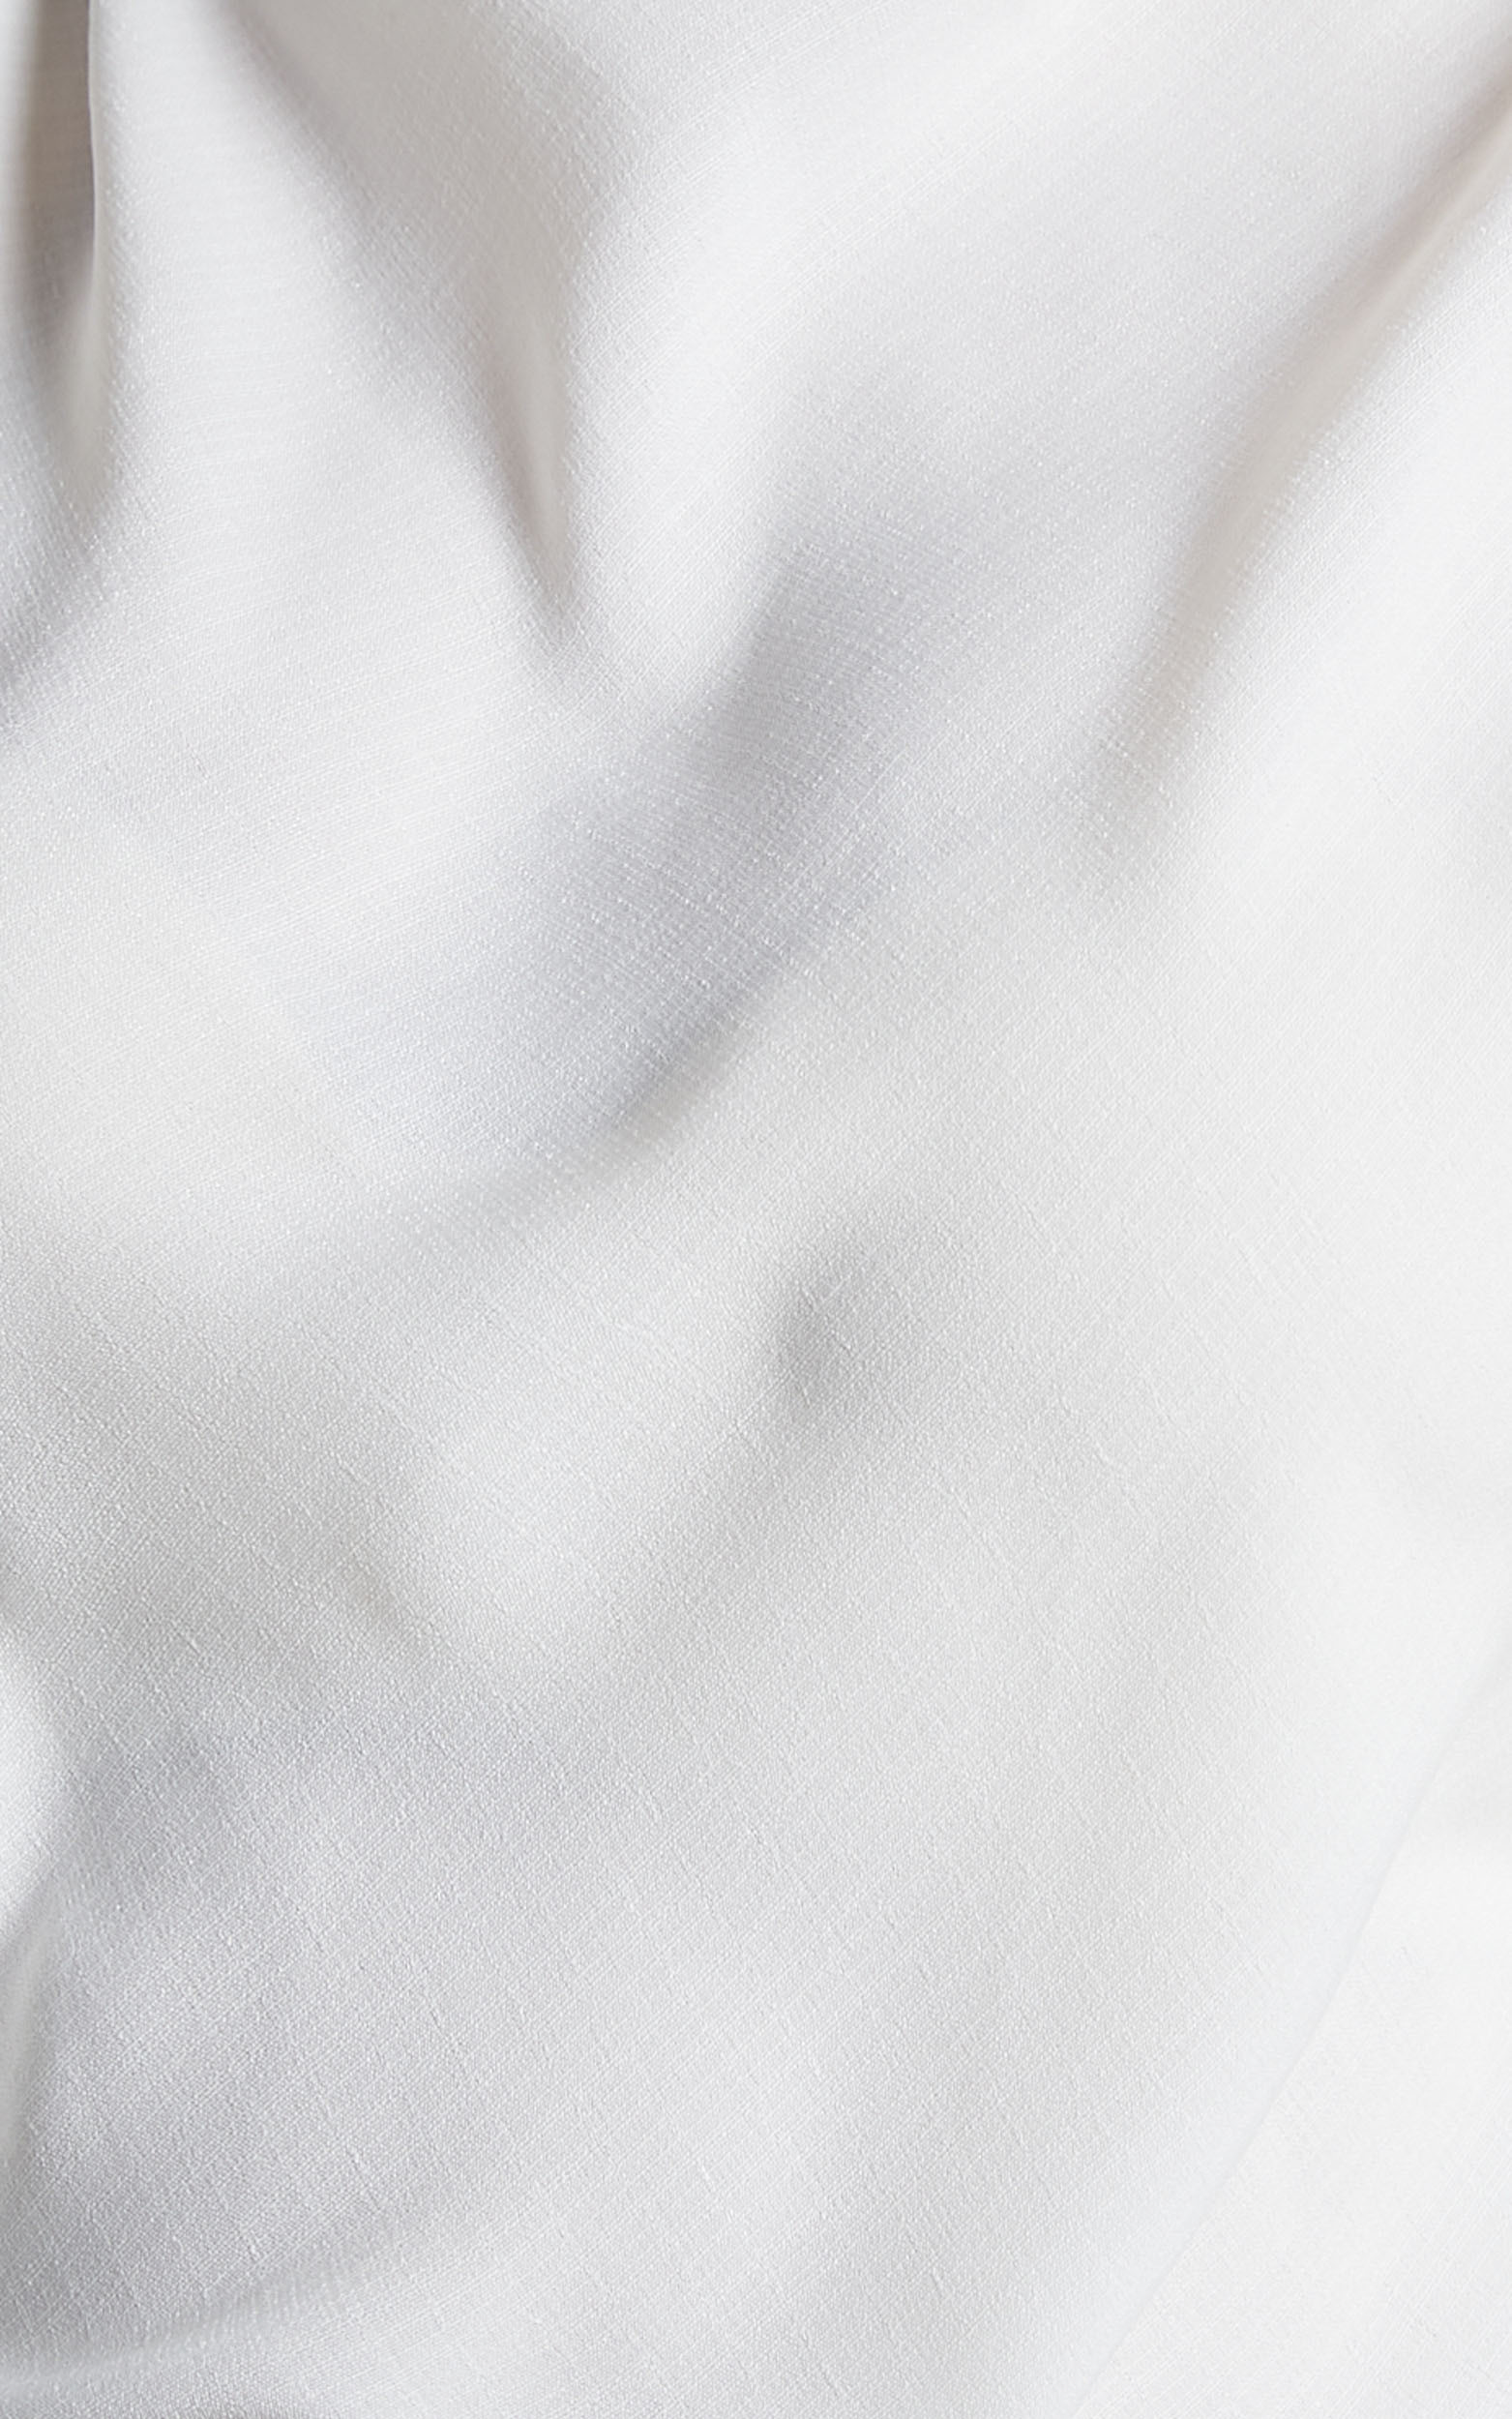 Arianae High Neck Top in White | Showpo